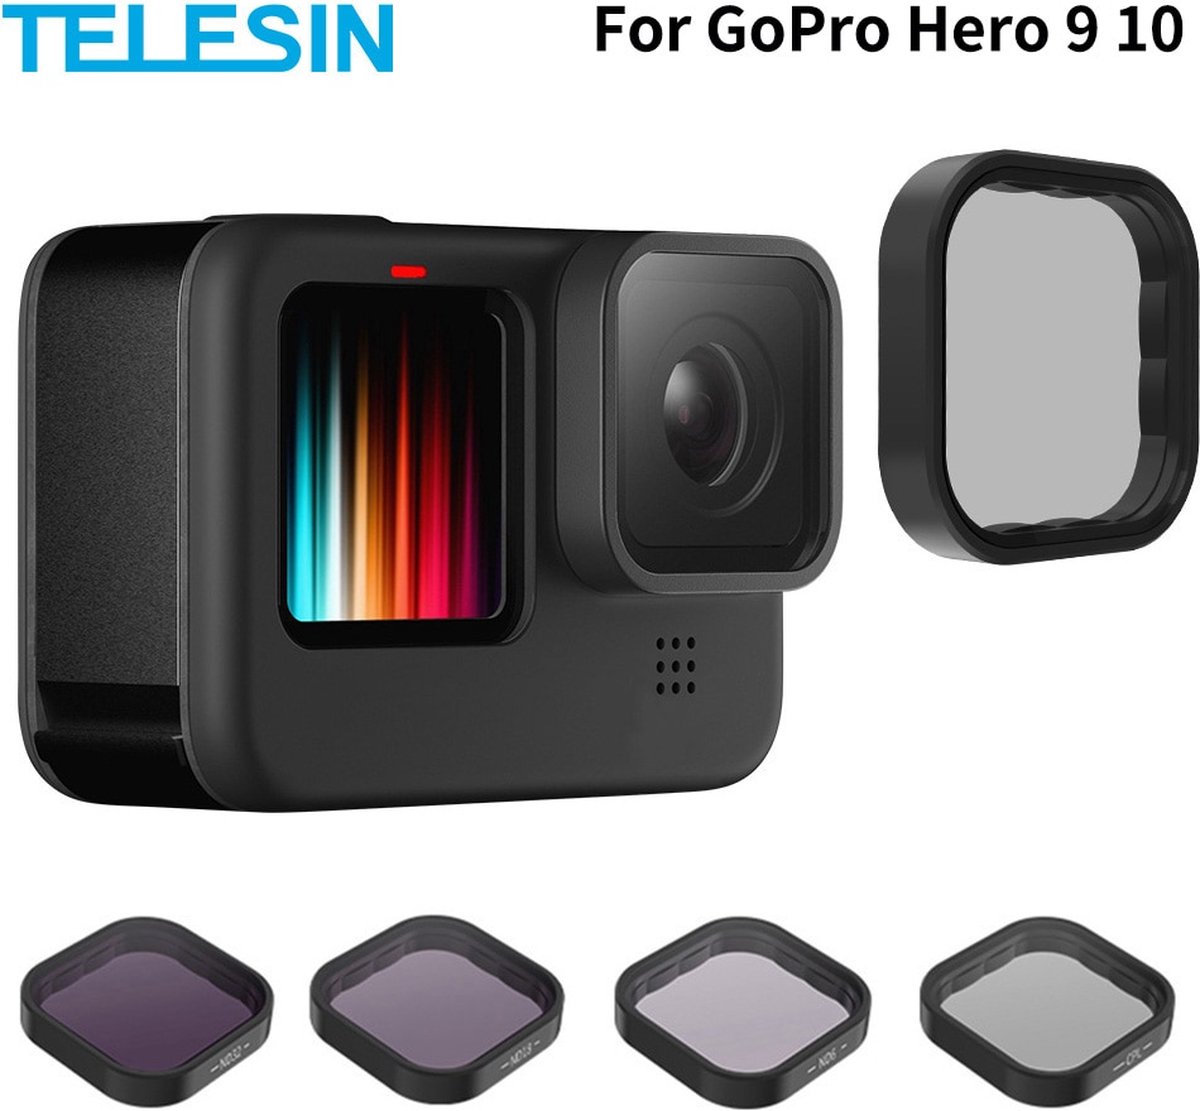 1 Lens Adapter Ring 1 4 2 UV Filter, ND4/ND8/ND16/ND32 CPL Filter, Neutral Density ND Filter Lens Cap, Neewer Camera Lens Filter Kit for GoPro Hero 5/6/7: , 2 